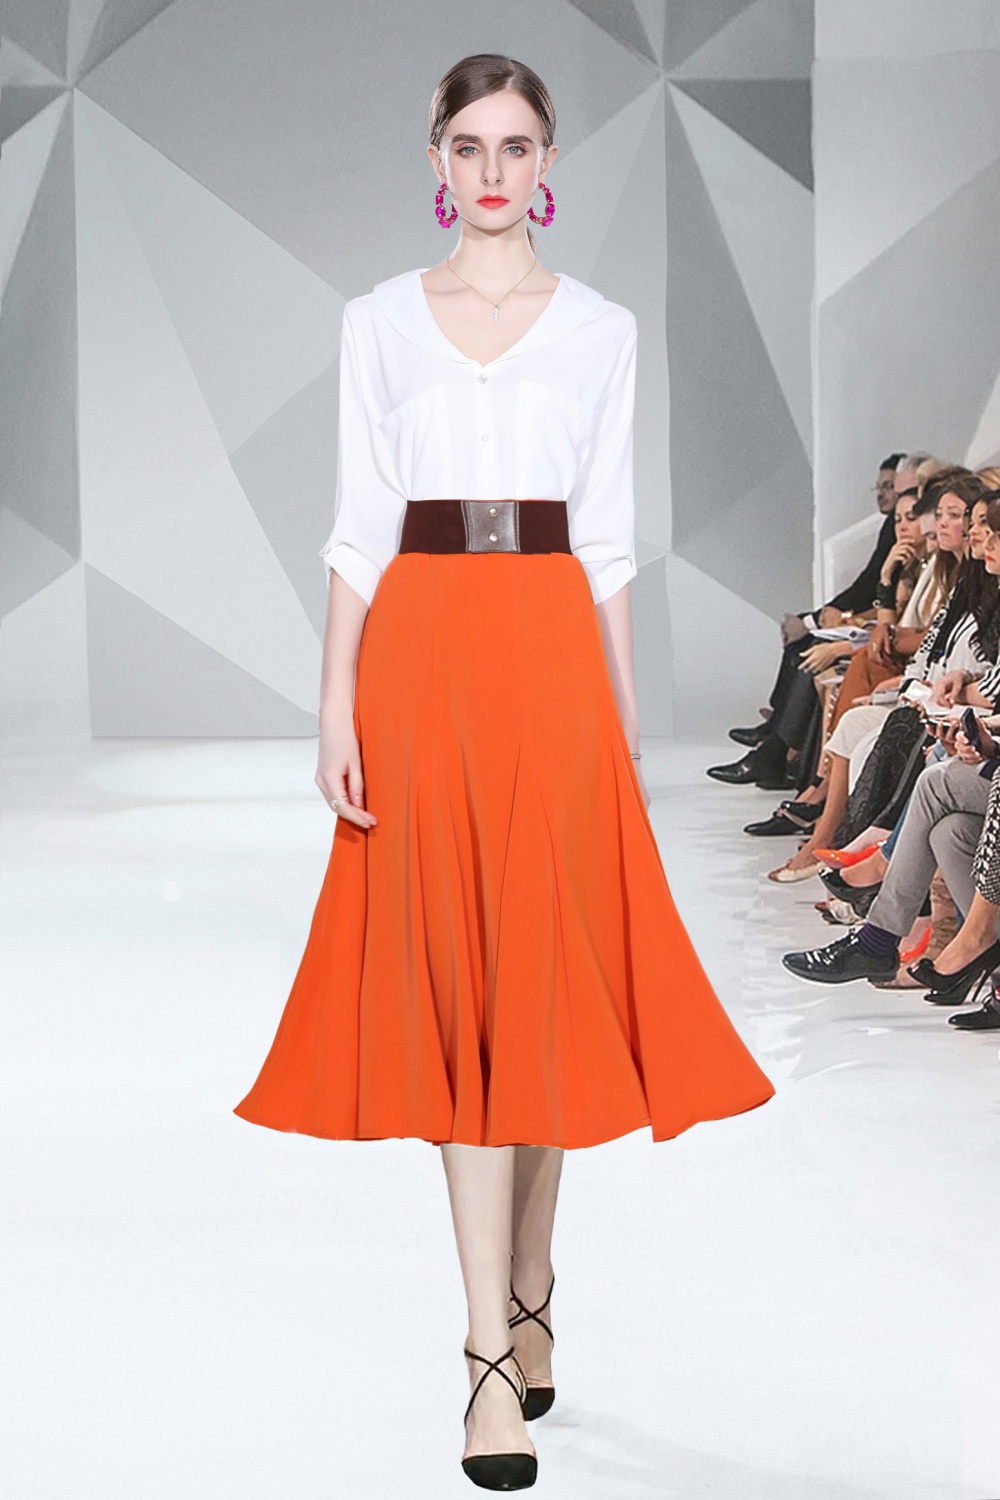 Splice orange refreshing skirt white autumn shirt 2pcs set